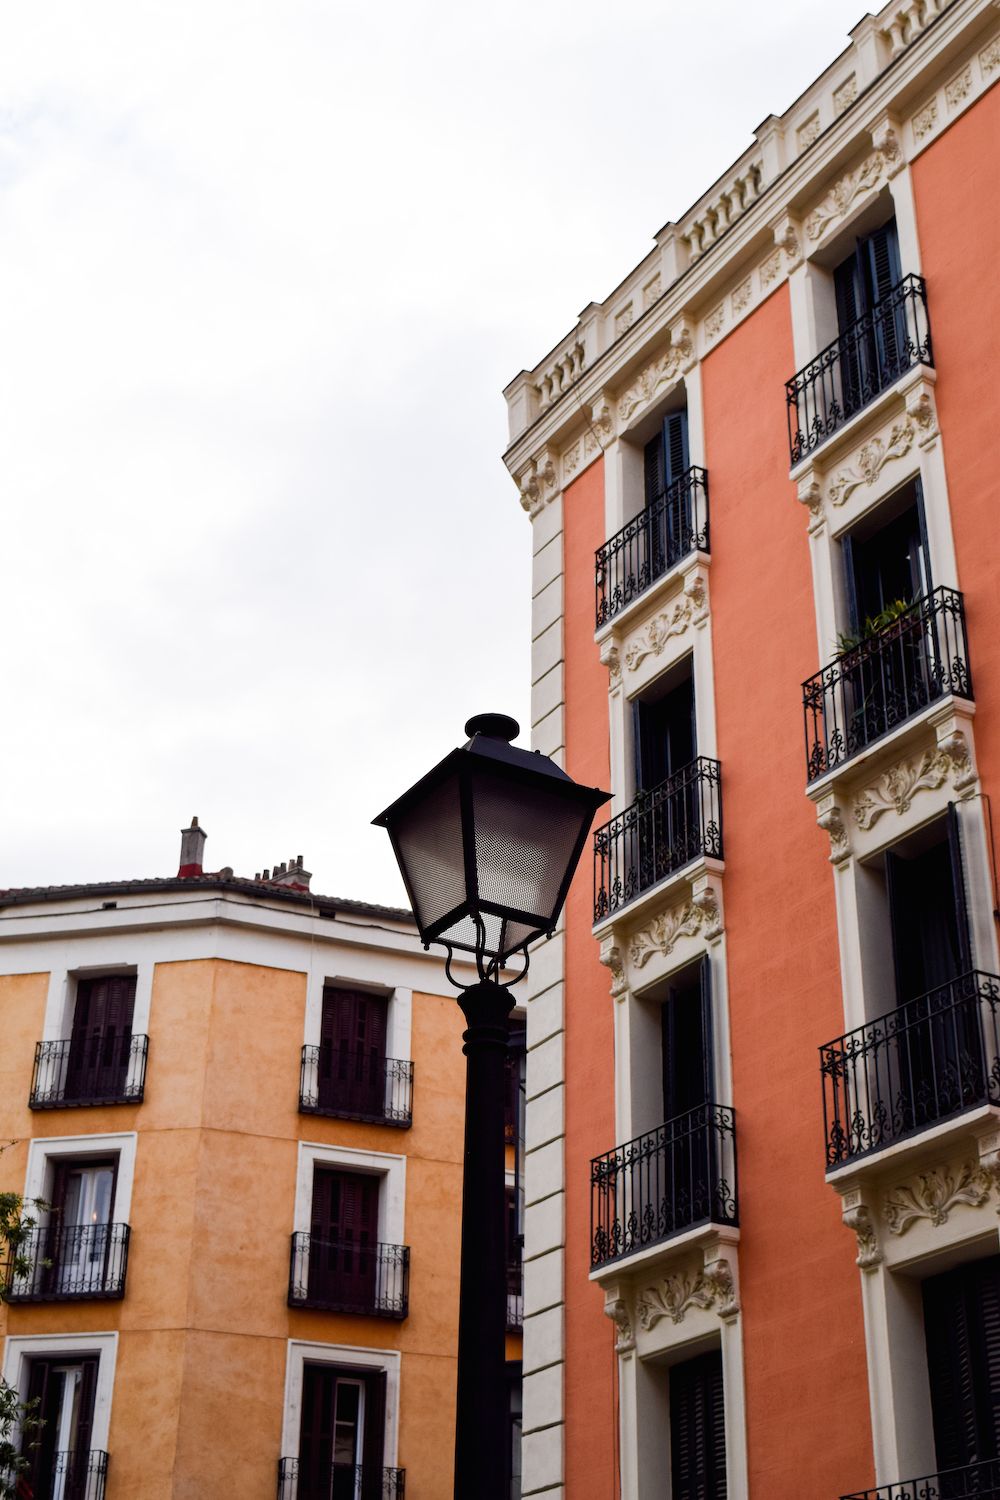 Orange and coral buildings in Malasaña, Madrid